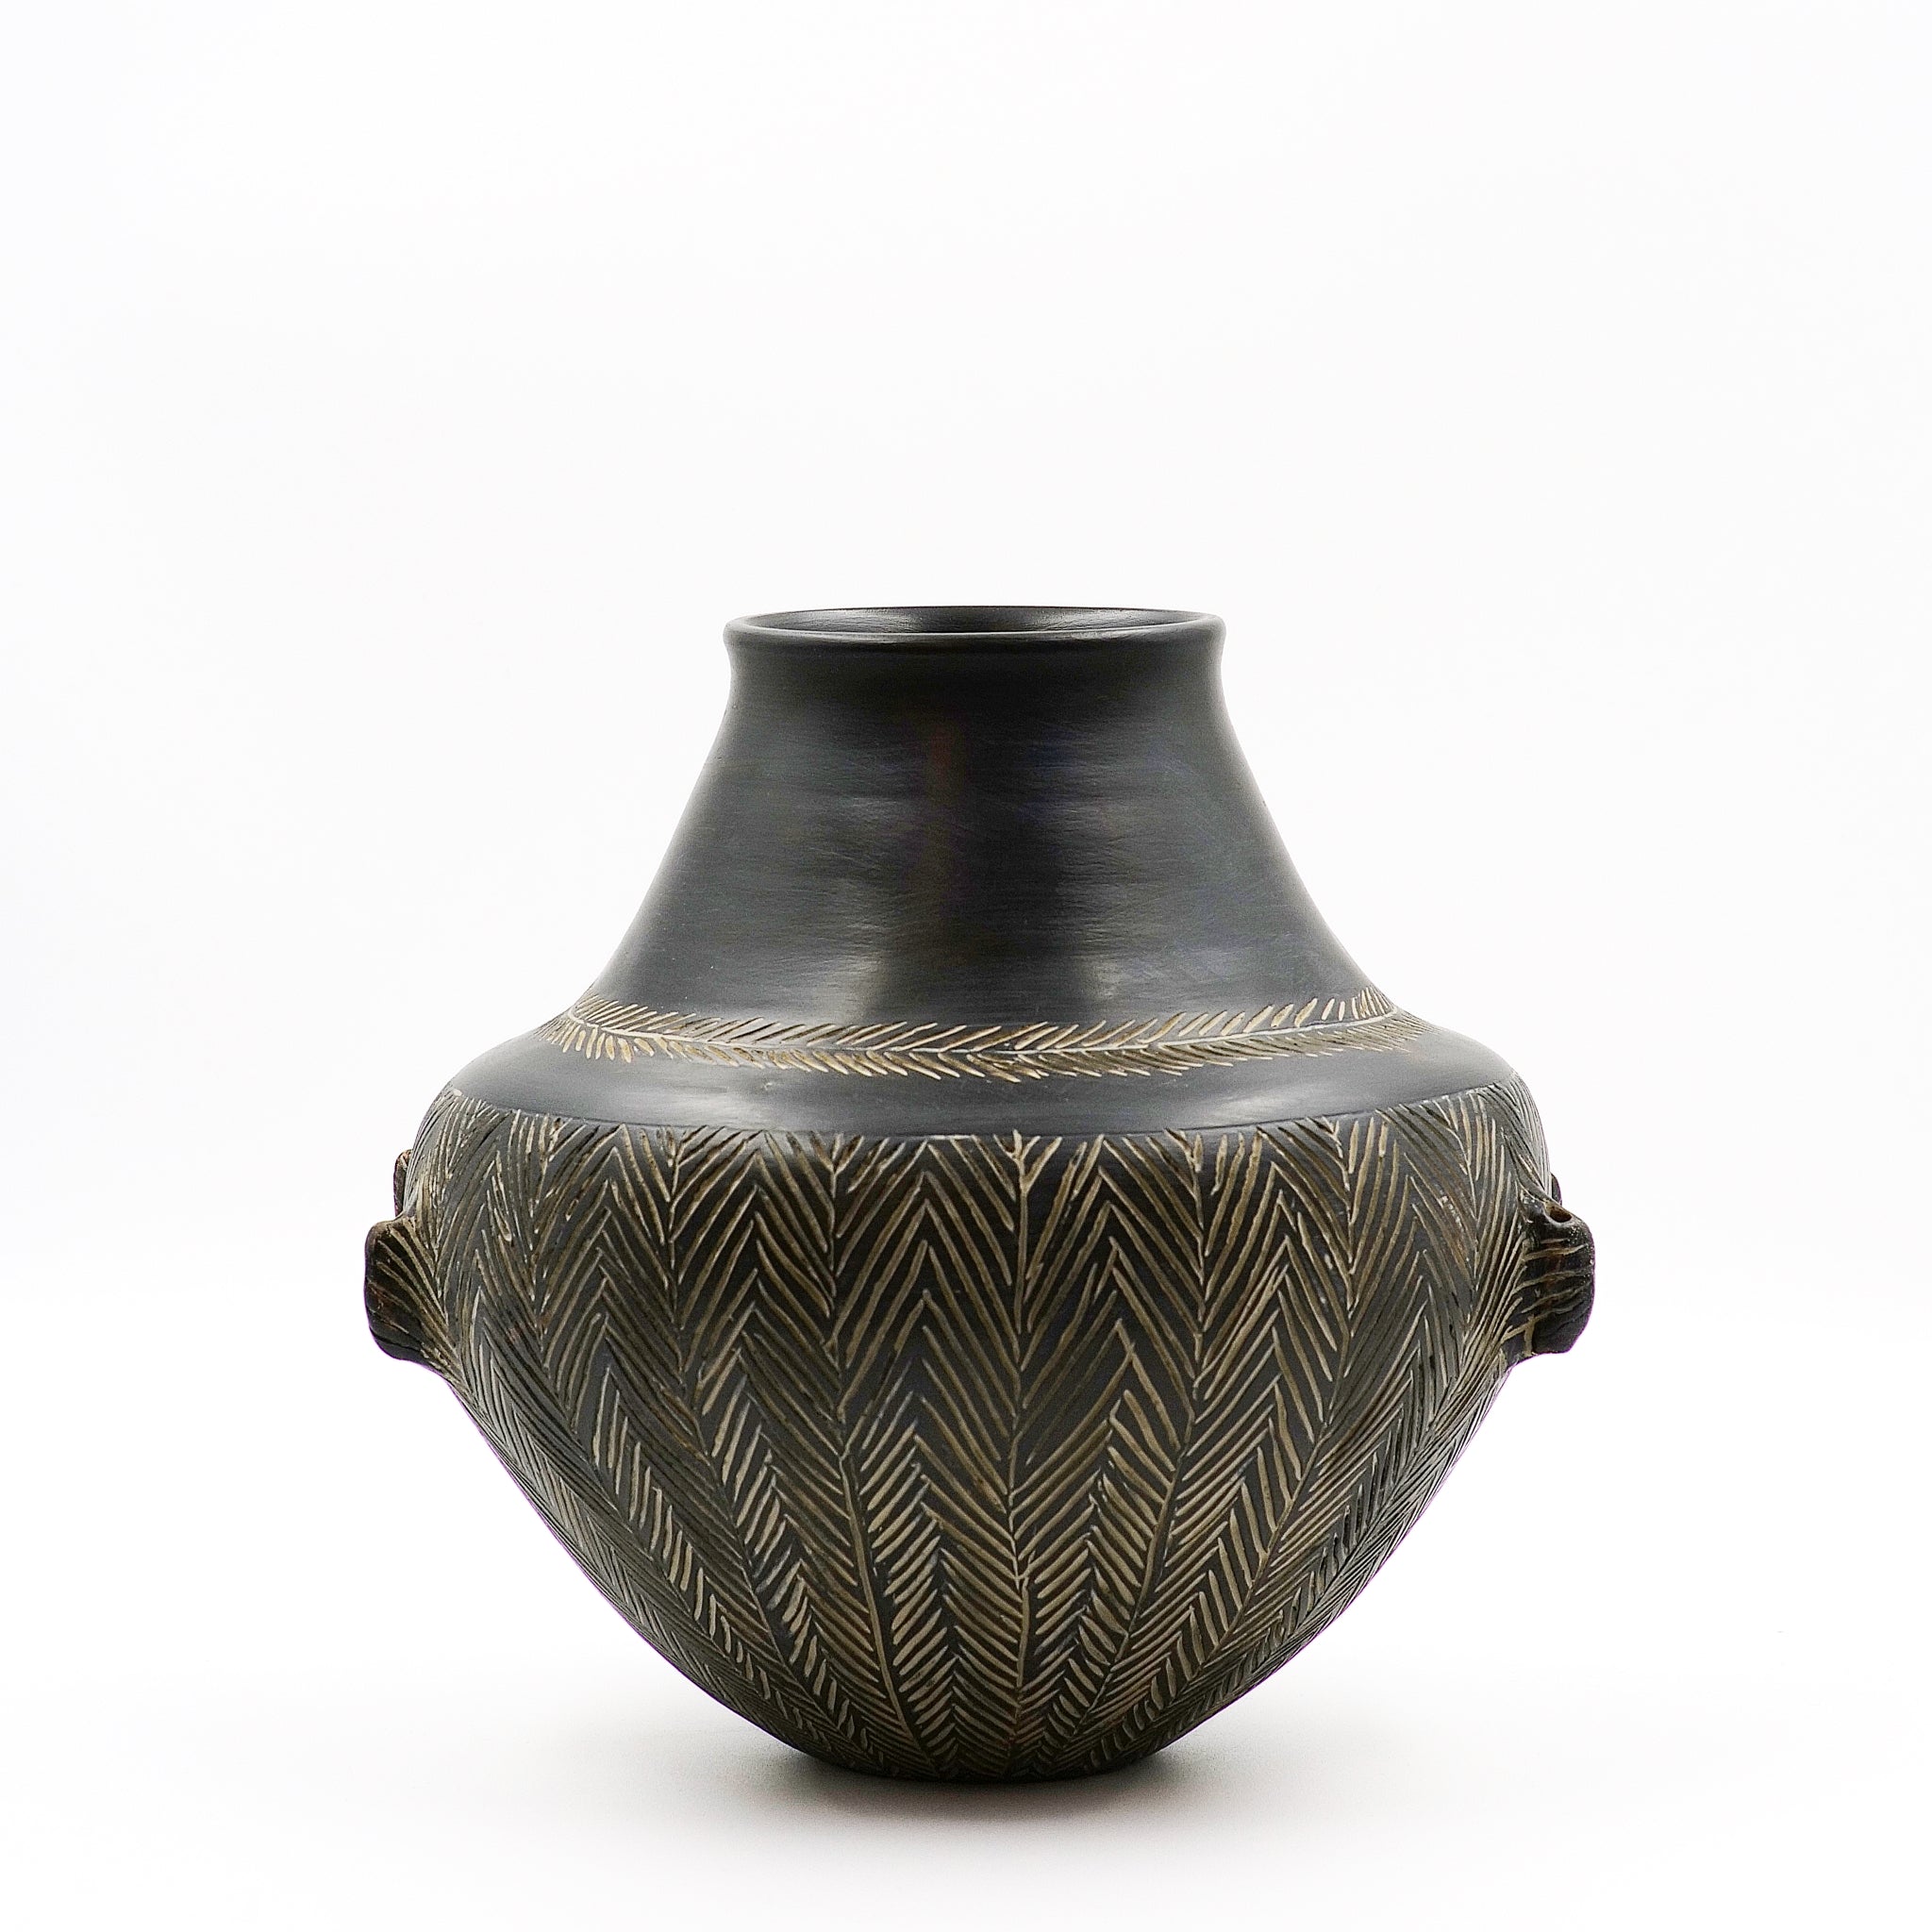 Despotiko Black incised vase